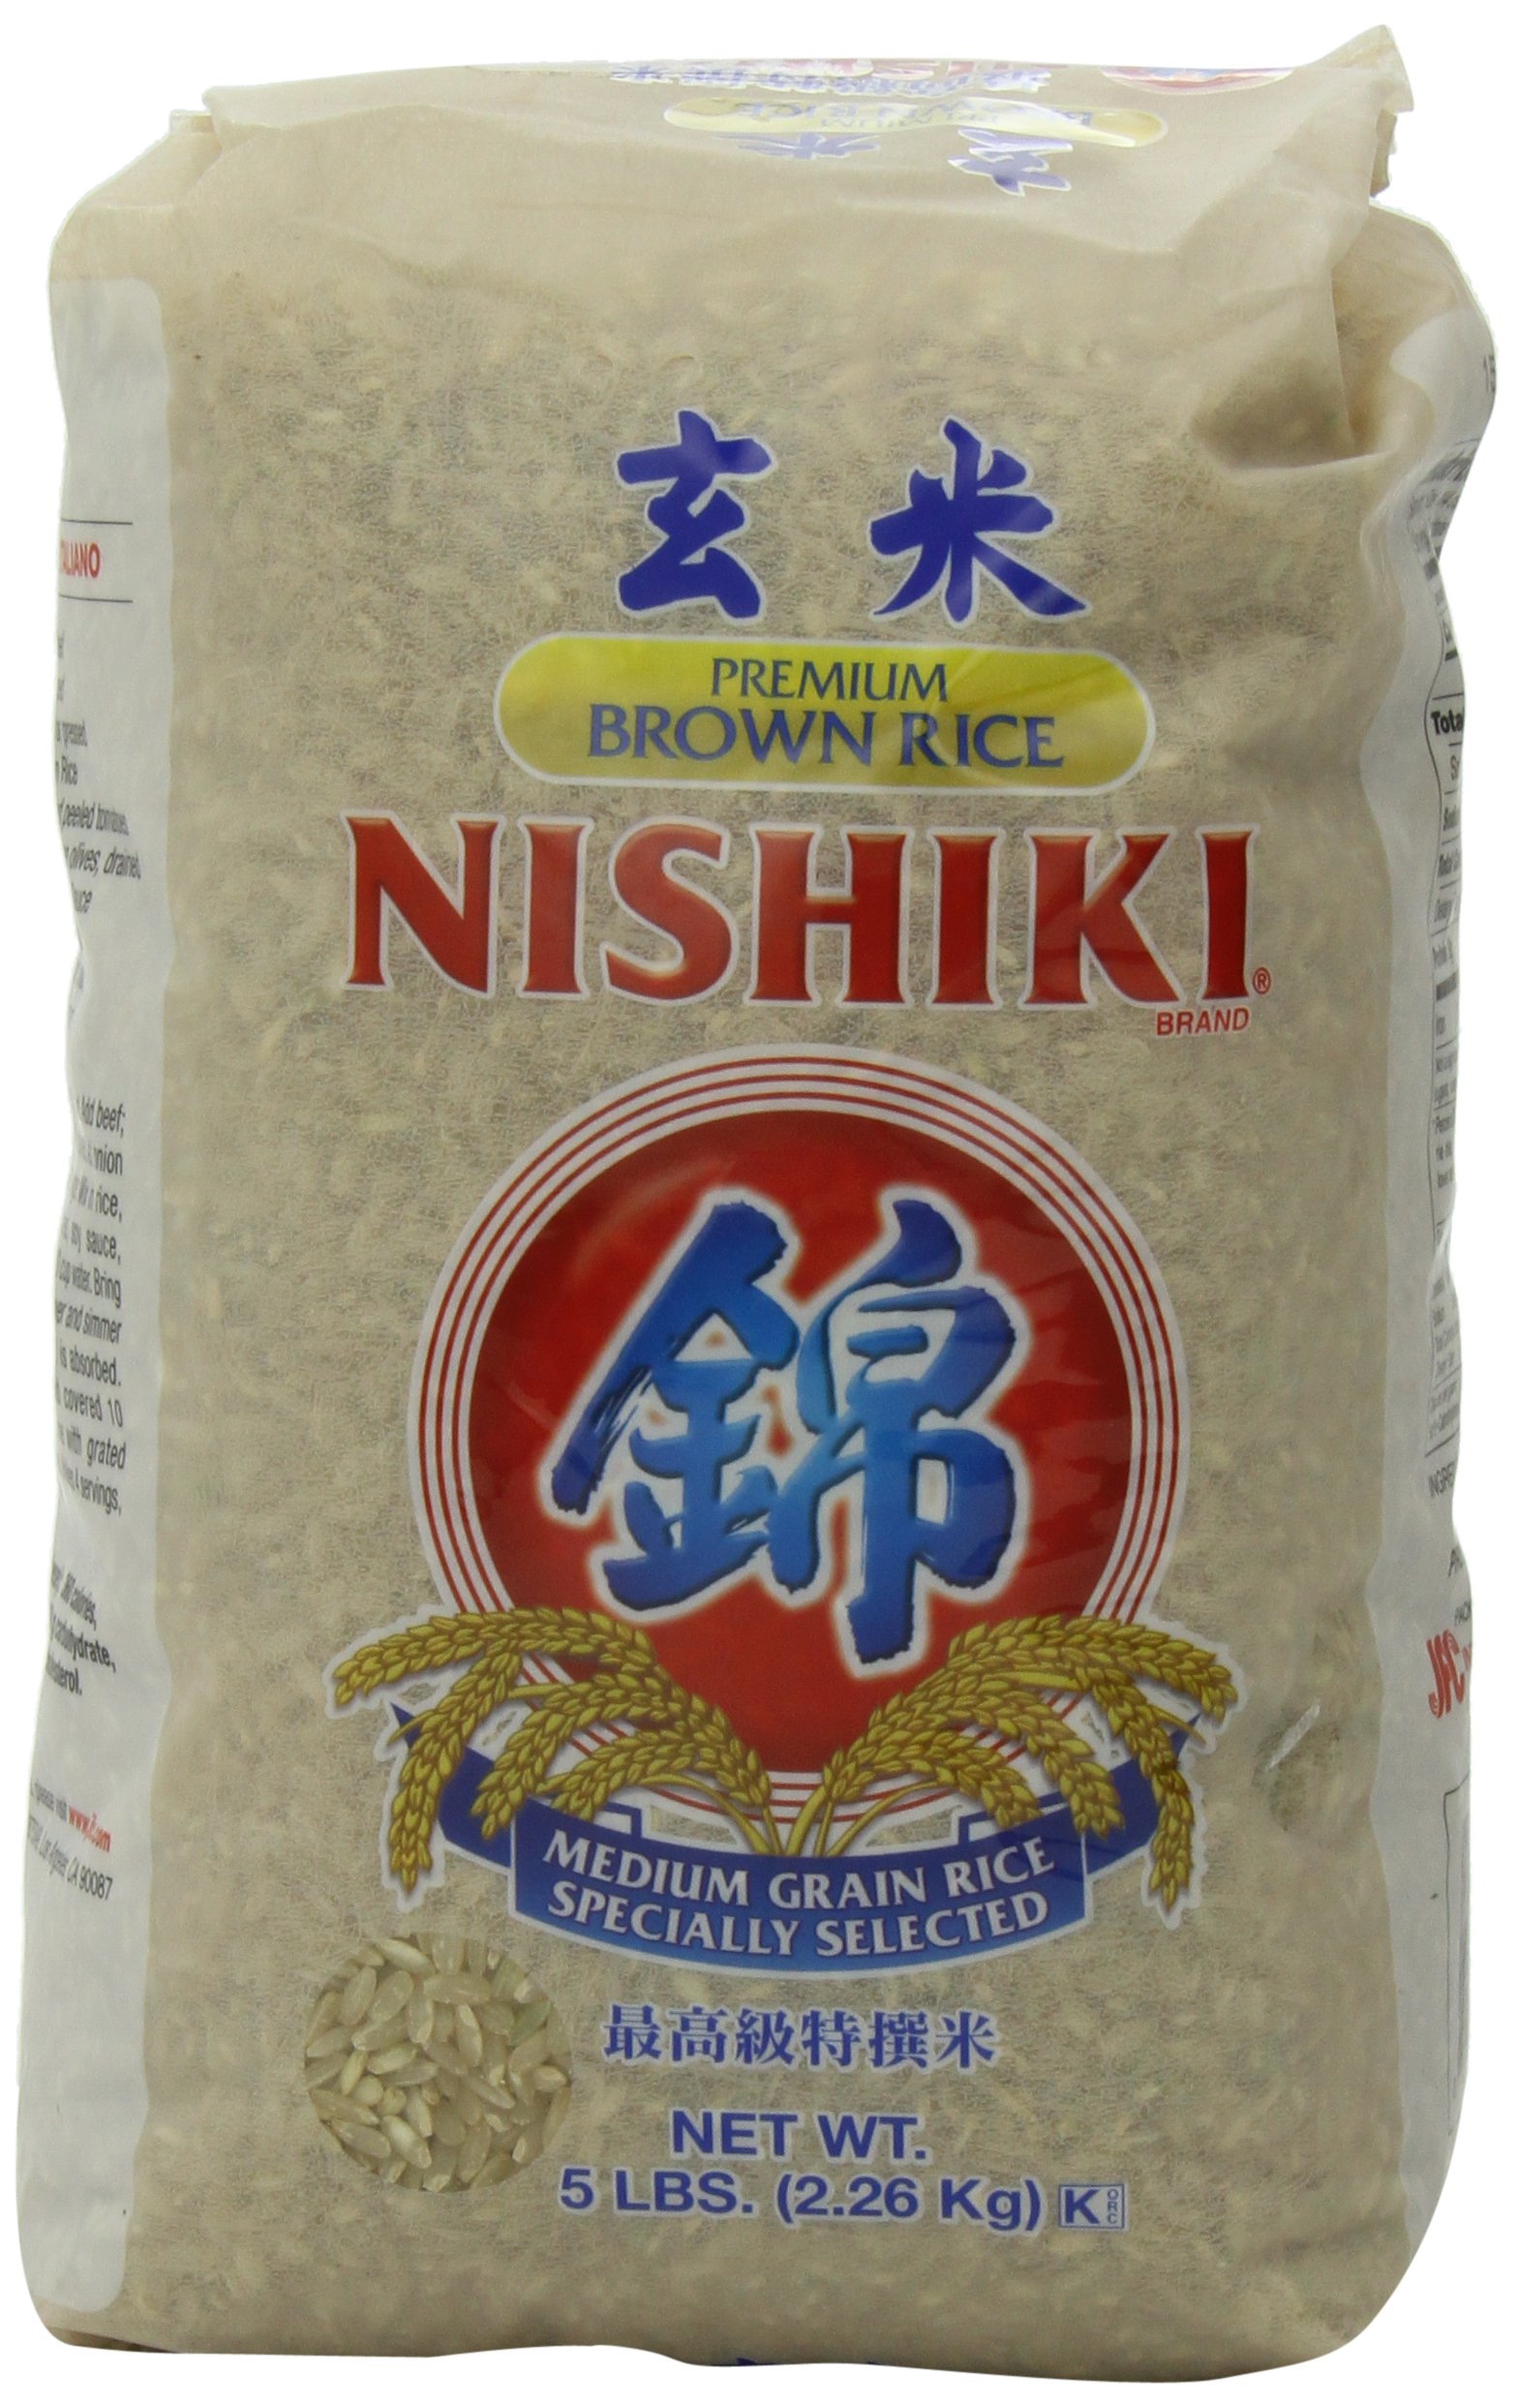 5-Lbs NISHIKI Premium Brown Rice $5.50 w/ S&S + Free Shipping w/ Prime or on $35+